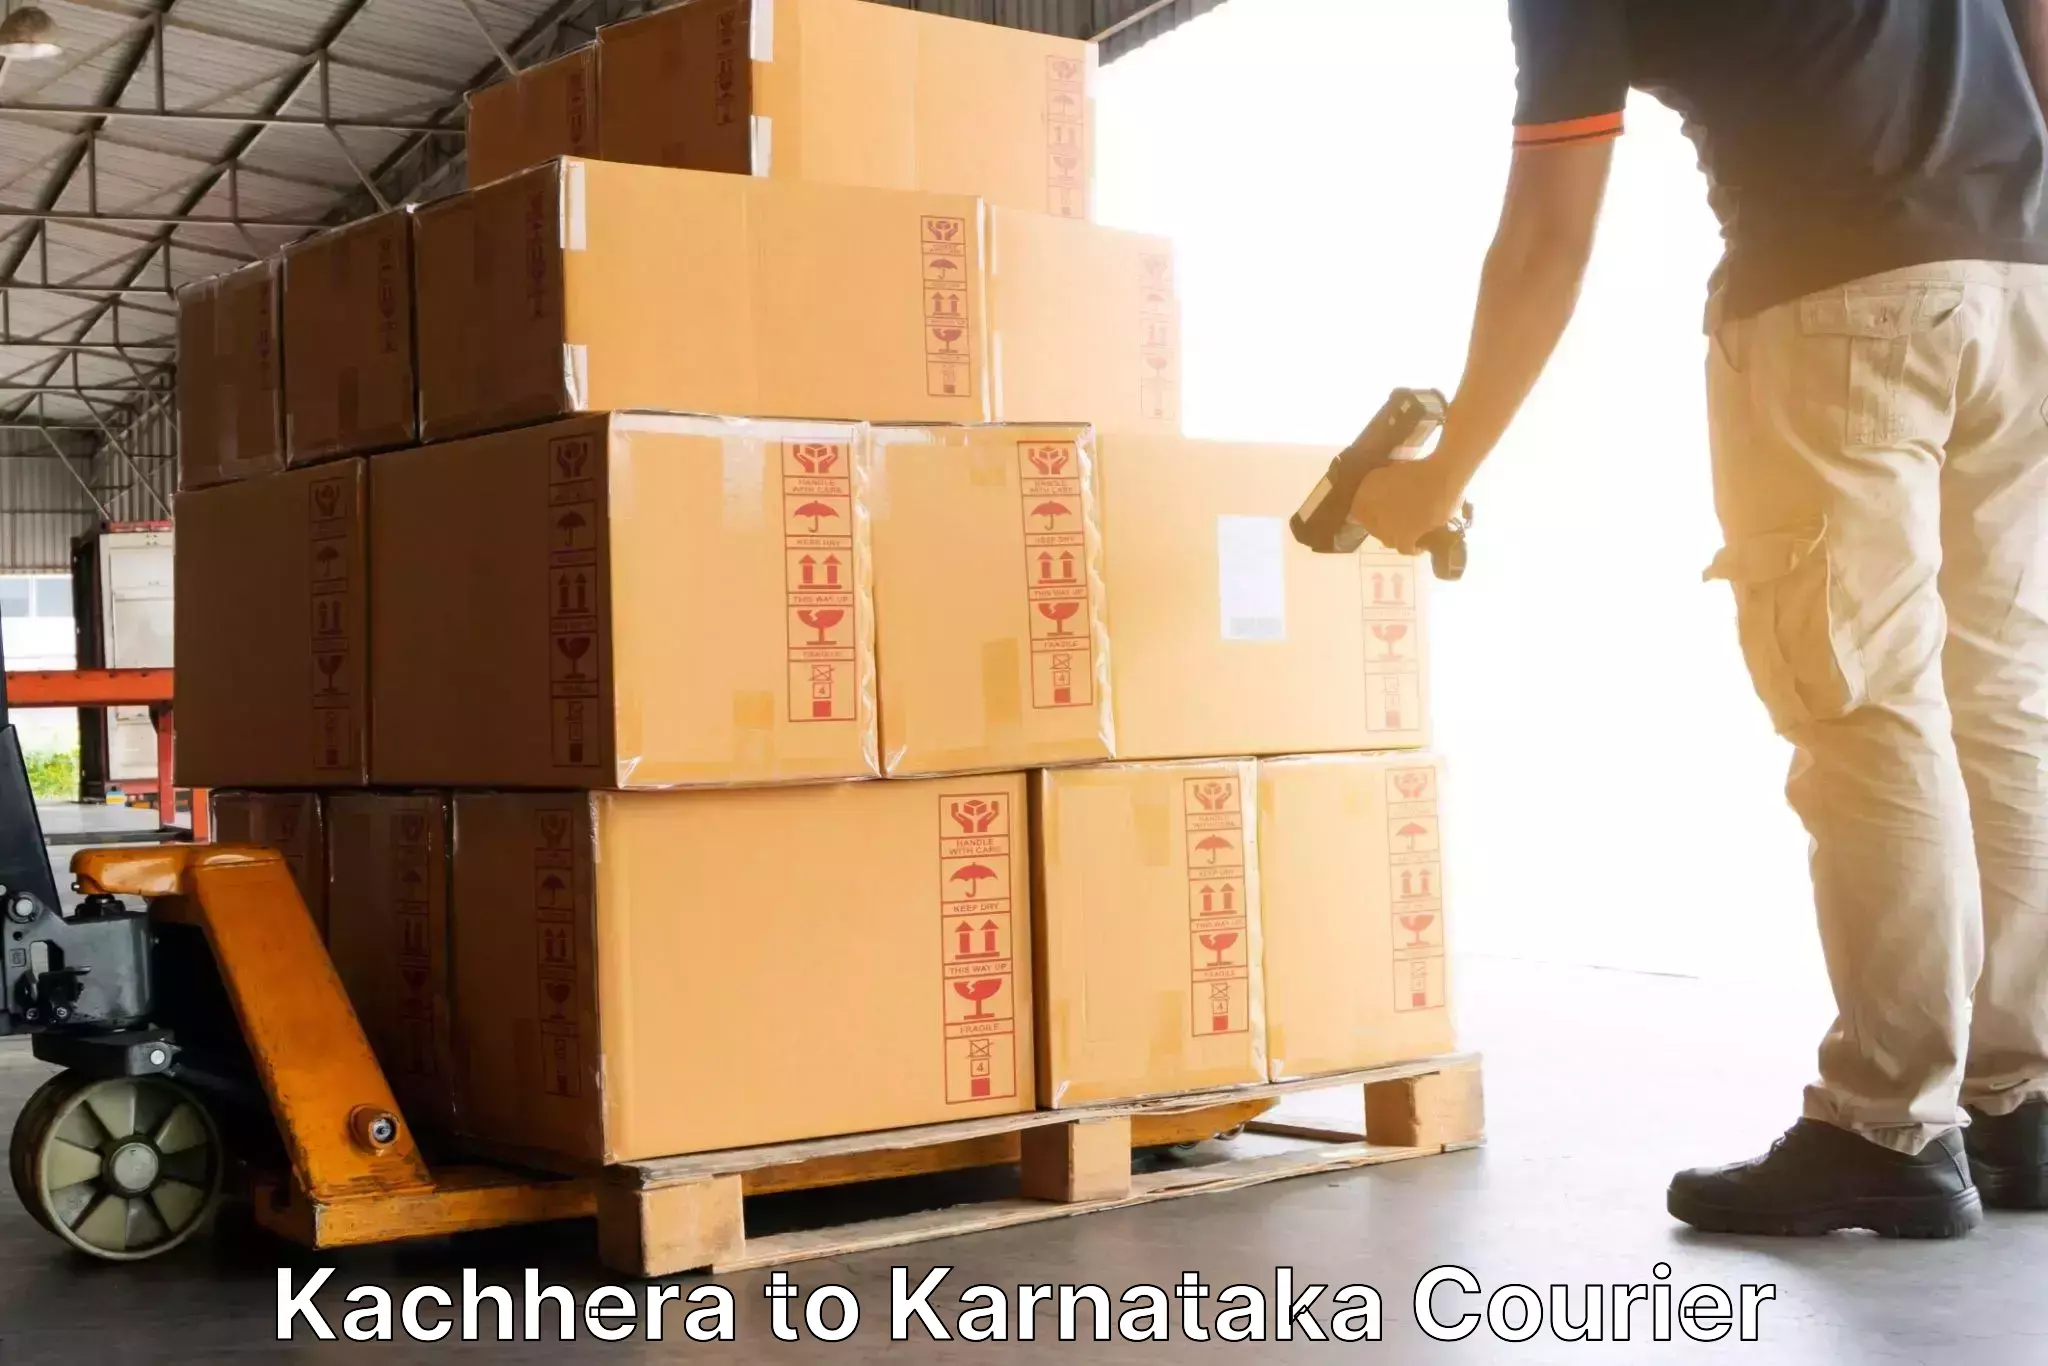 Doorstep delivery service Kachhera to Bangalore